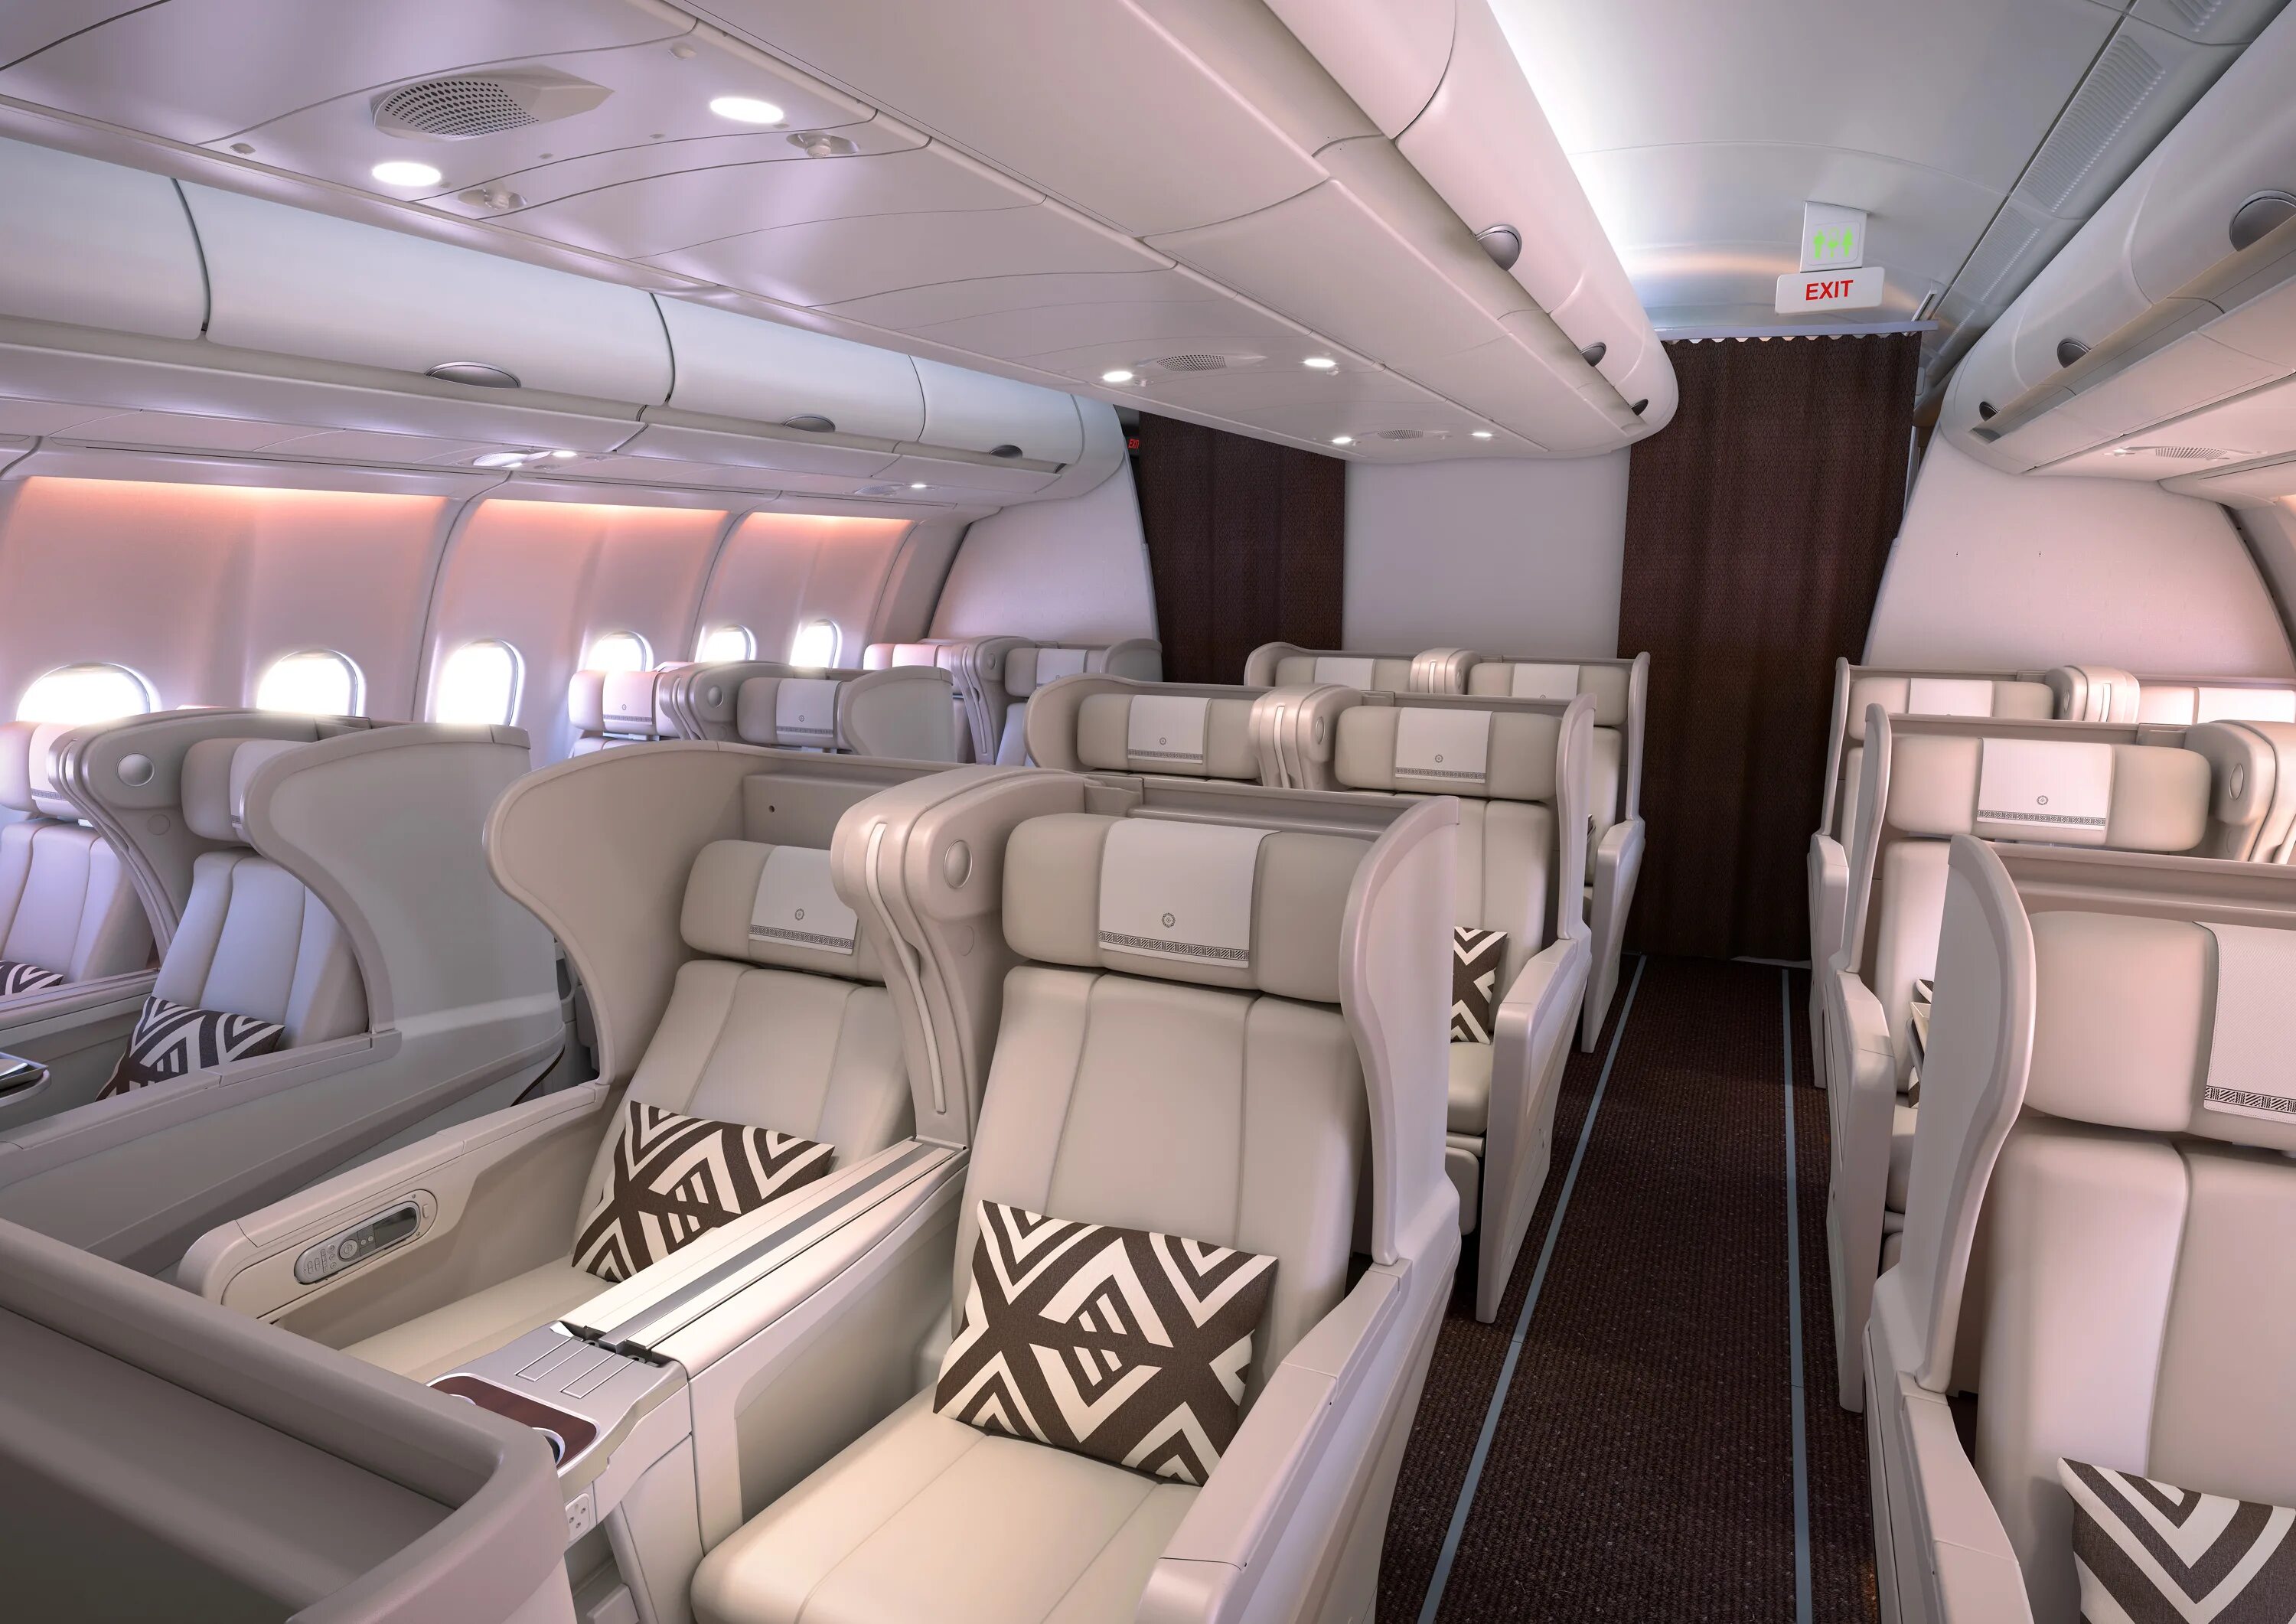 Аир класс. Фиджи Эйрвейз. Air Algerie бизнес класс 737. Fiji Airways Business class. Салон самолета бизнес класса.